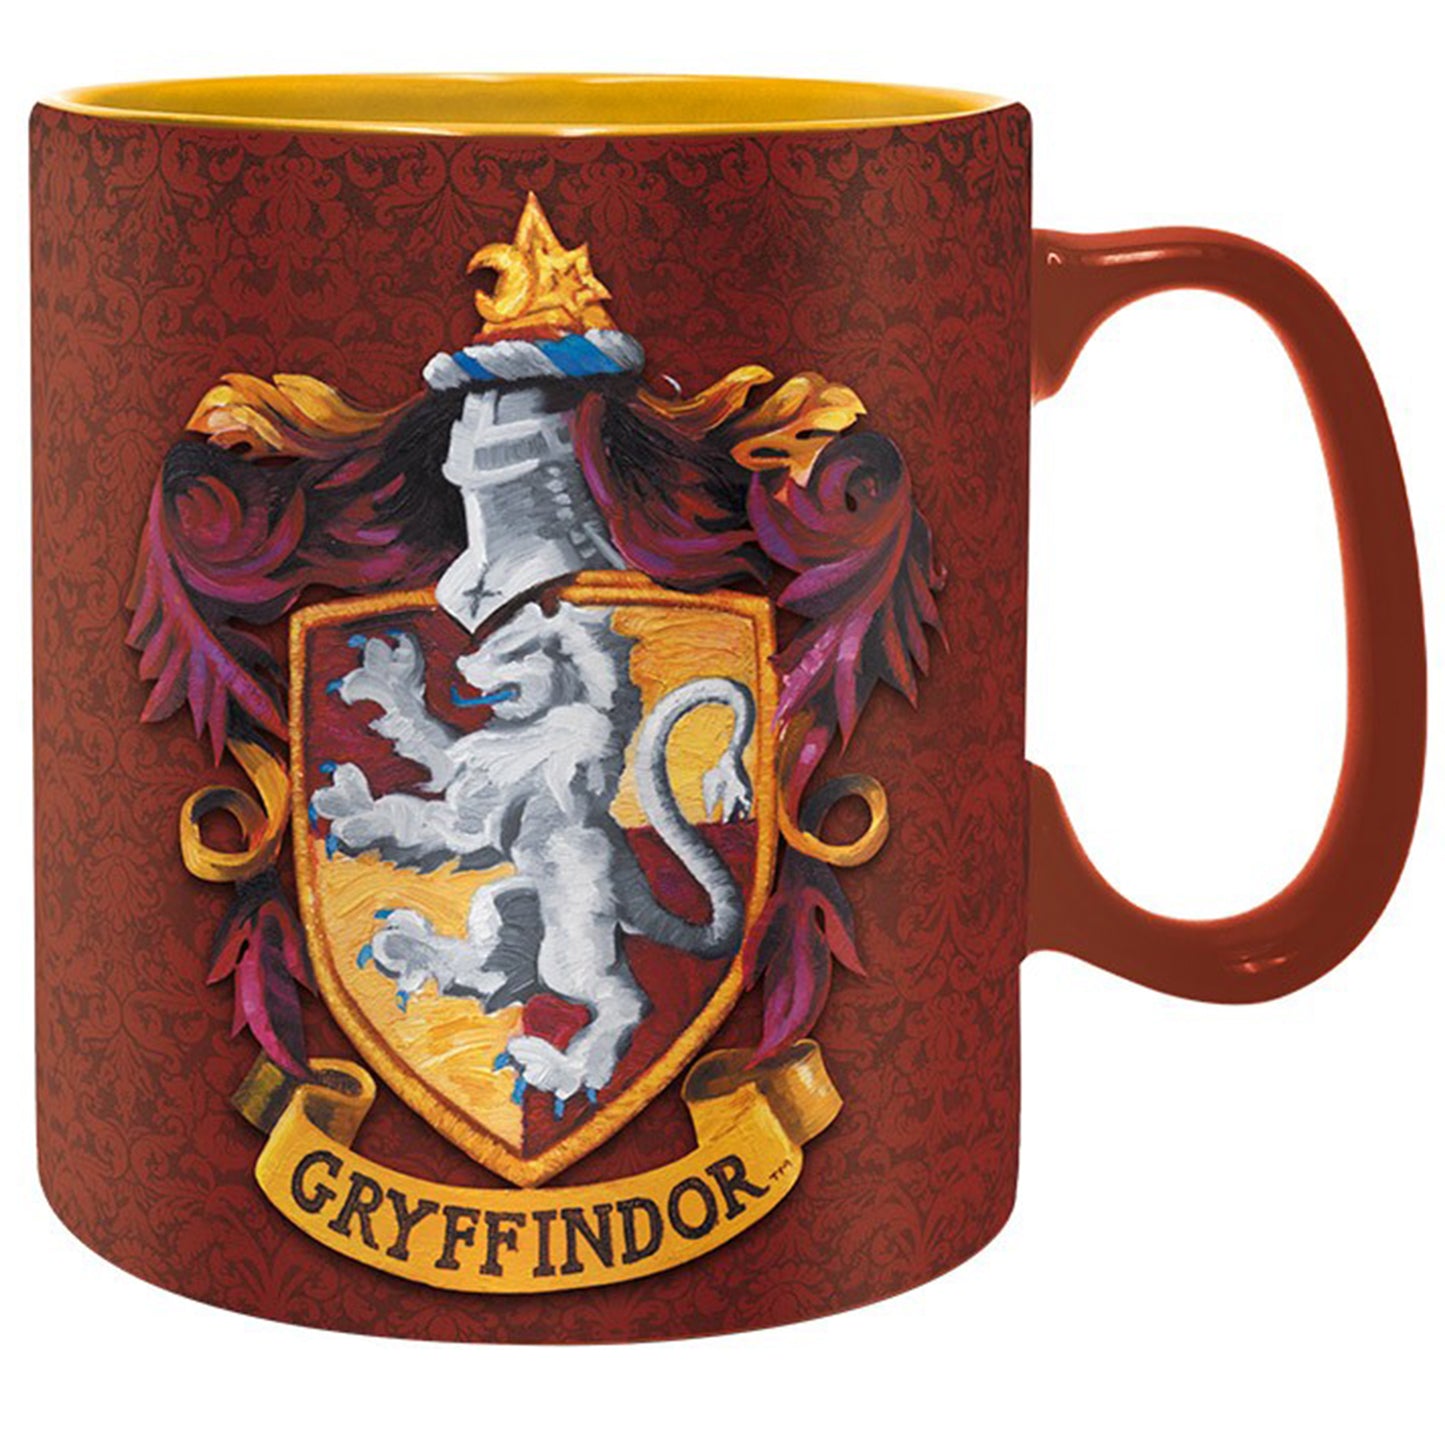 Gryffindor - King Size Harry Potter Mug with House Crest | Happy Piranha